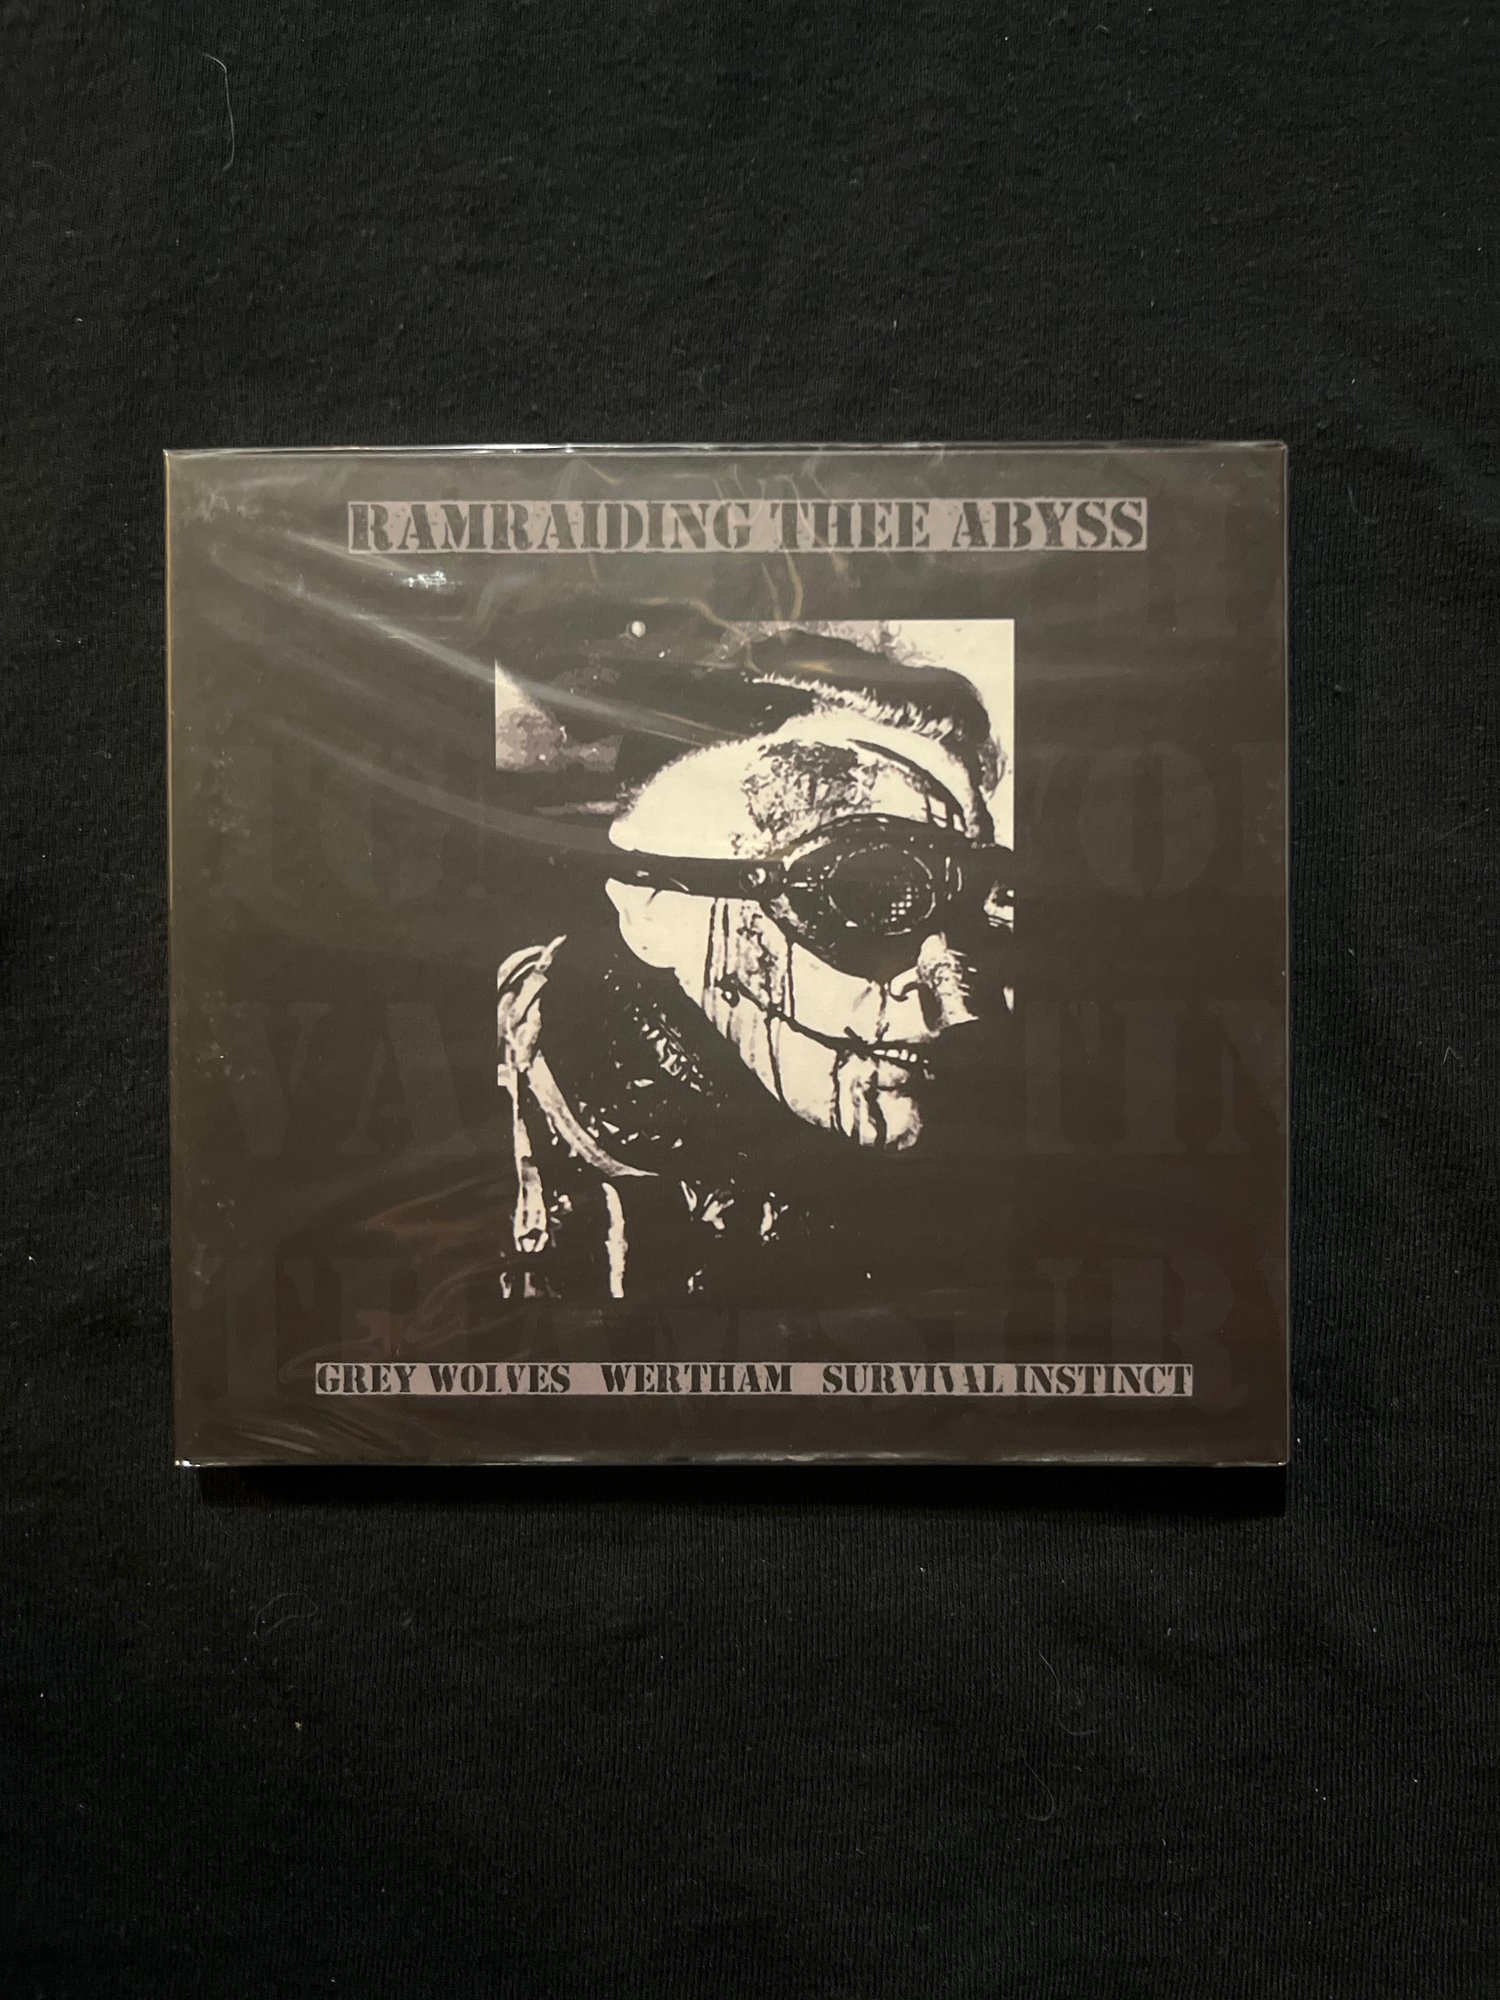 Grey Wolves/Wertham/Survival Instinct - Ramraiding Thee Abyss CD (OEC)